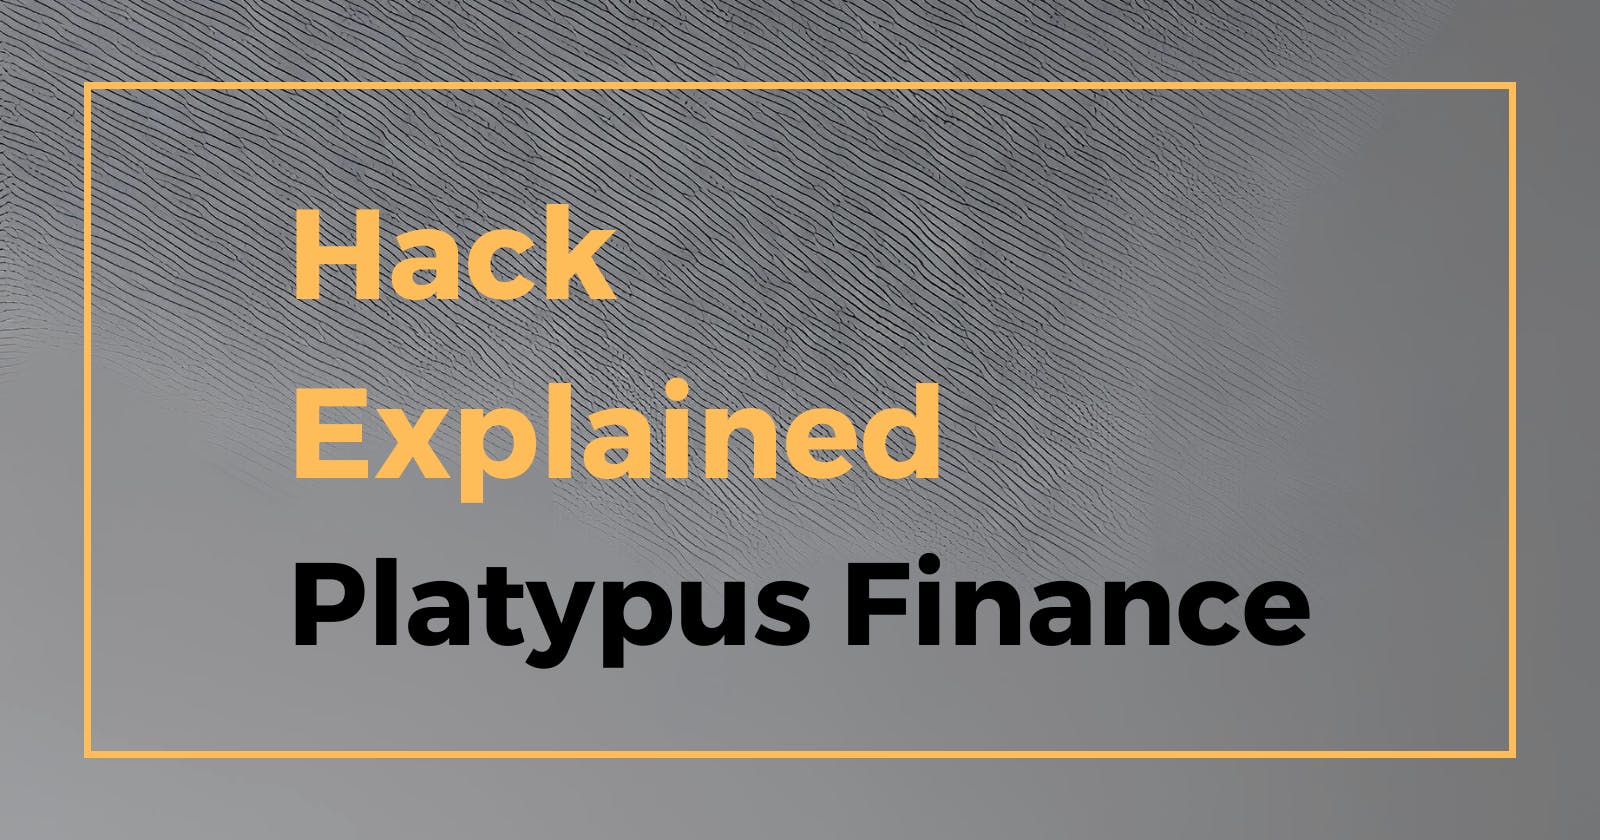 Platypus Finance: Third Time (Un)lucky